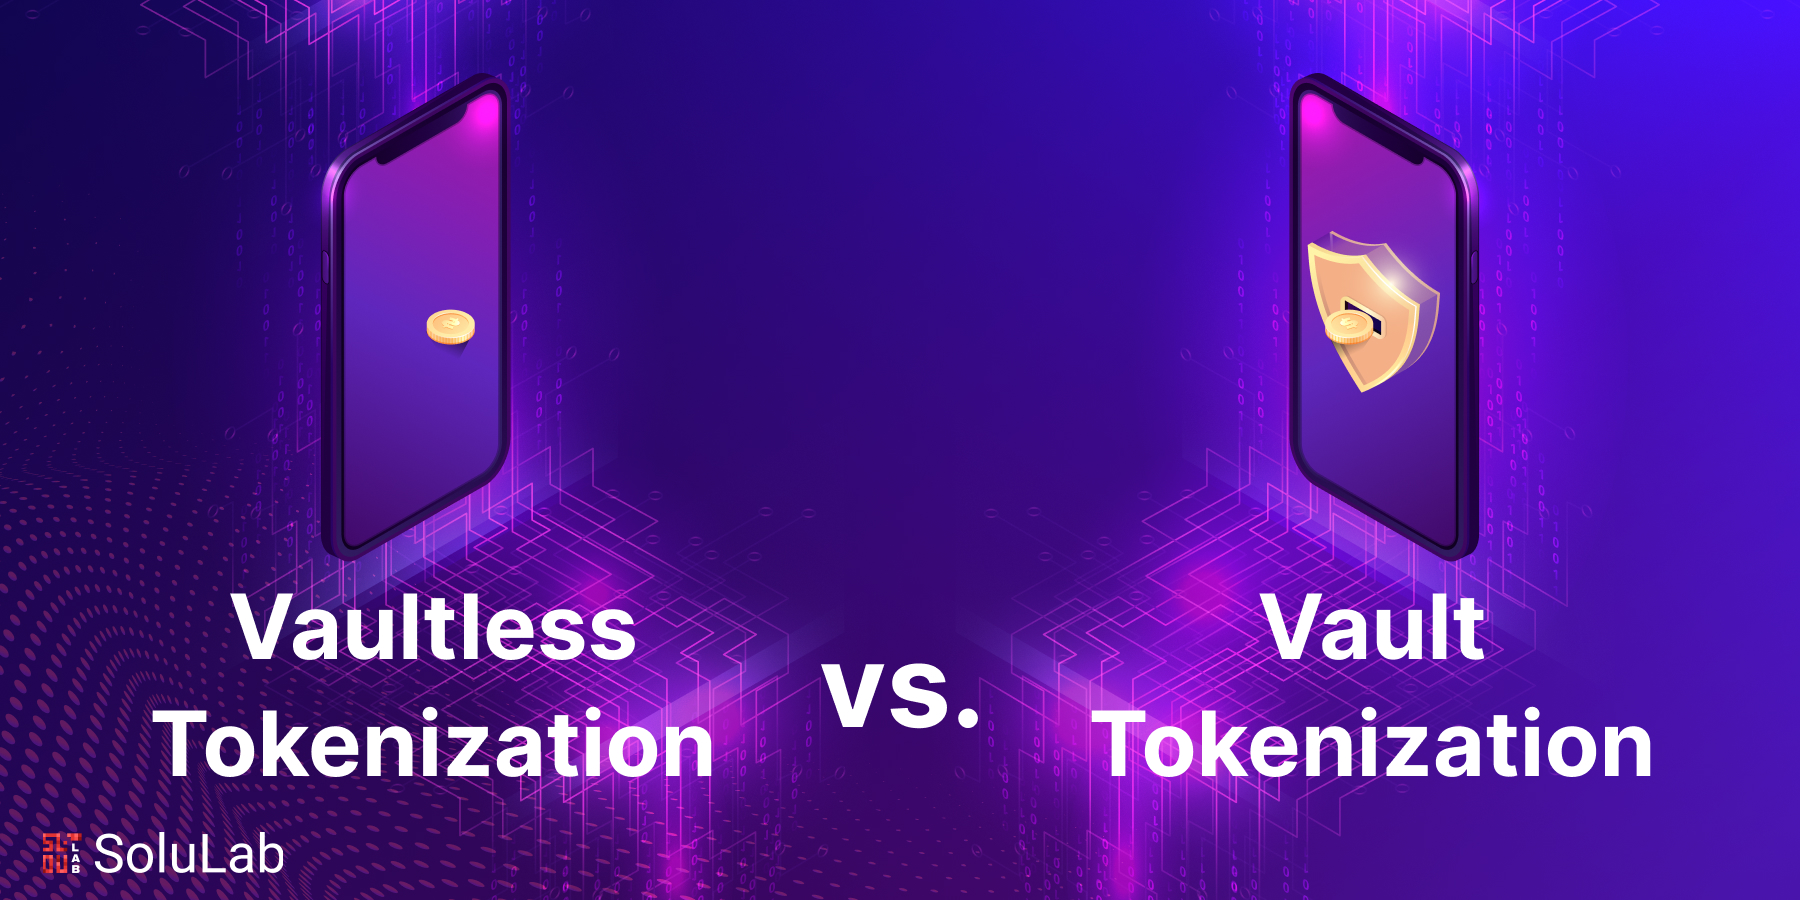 Vaultless Tokenization vs. Vault Tokenization